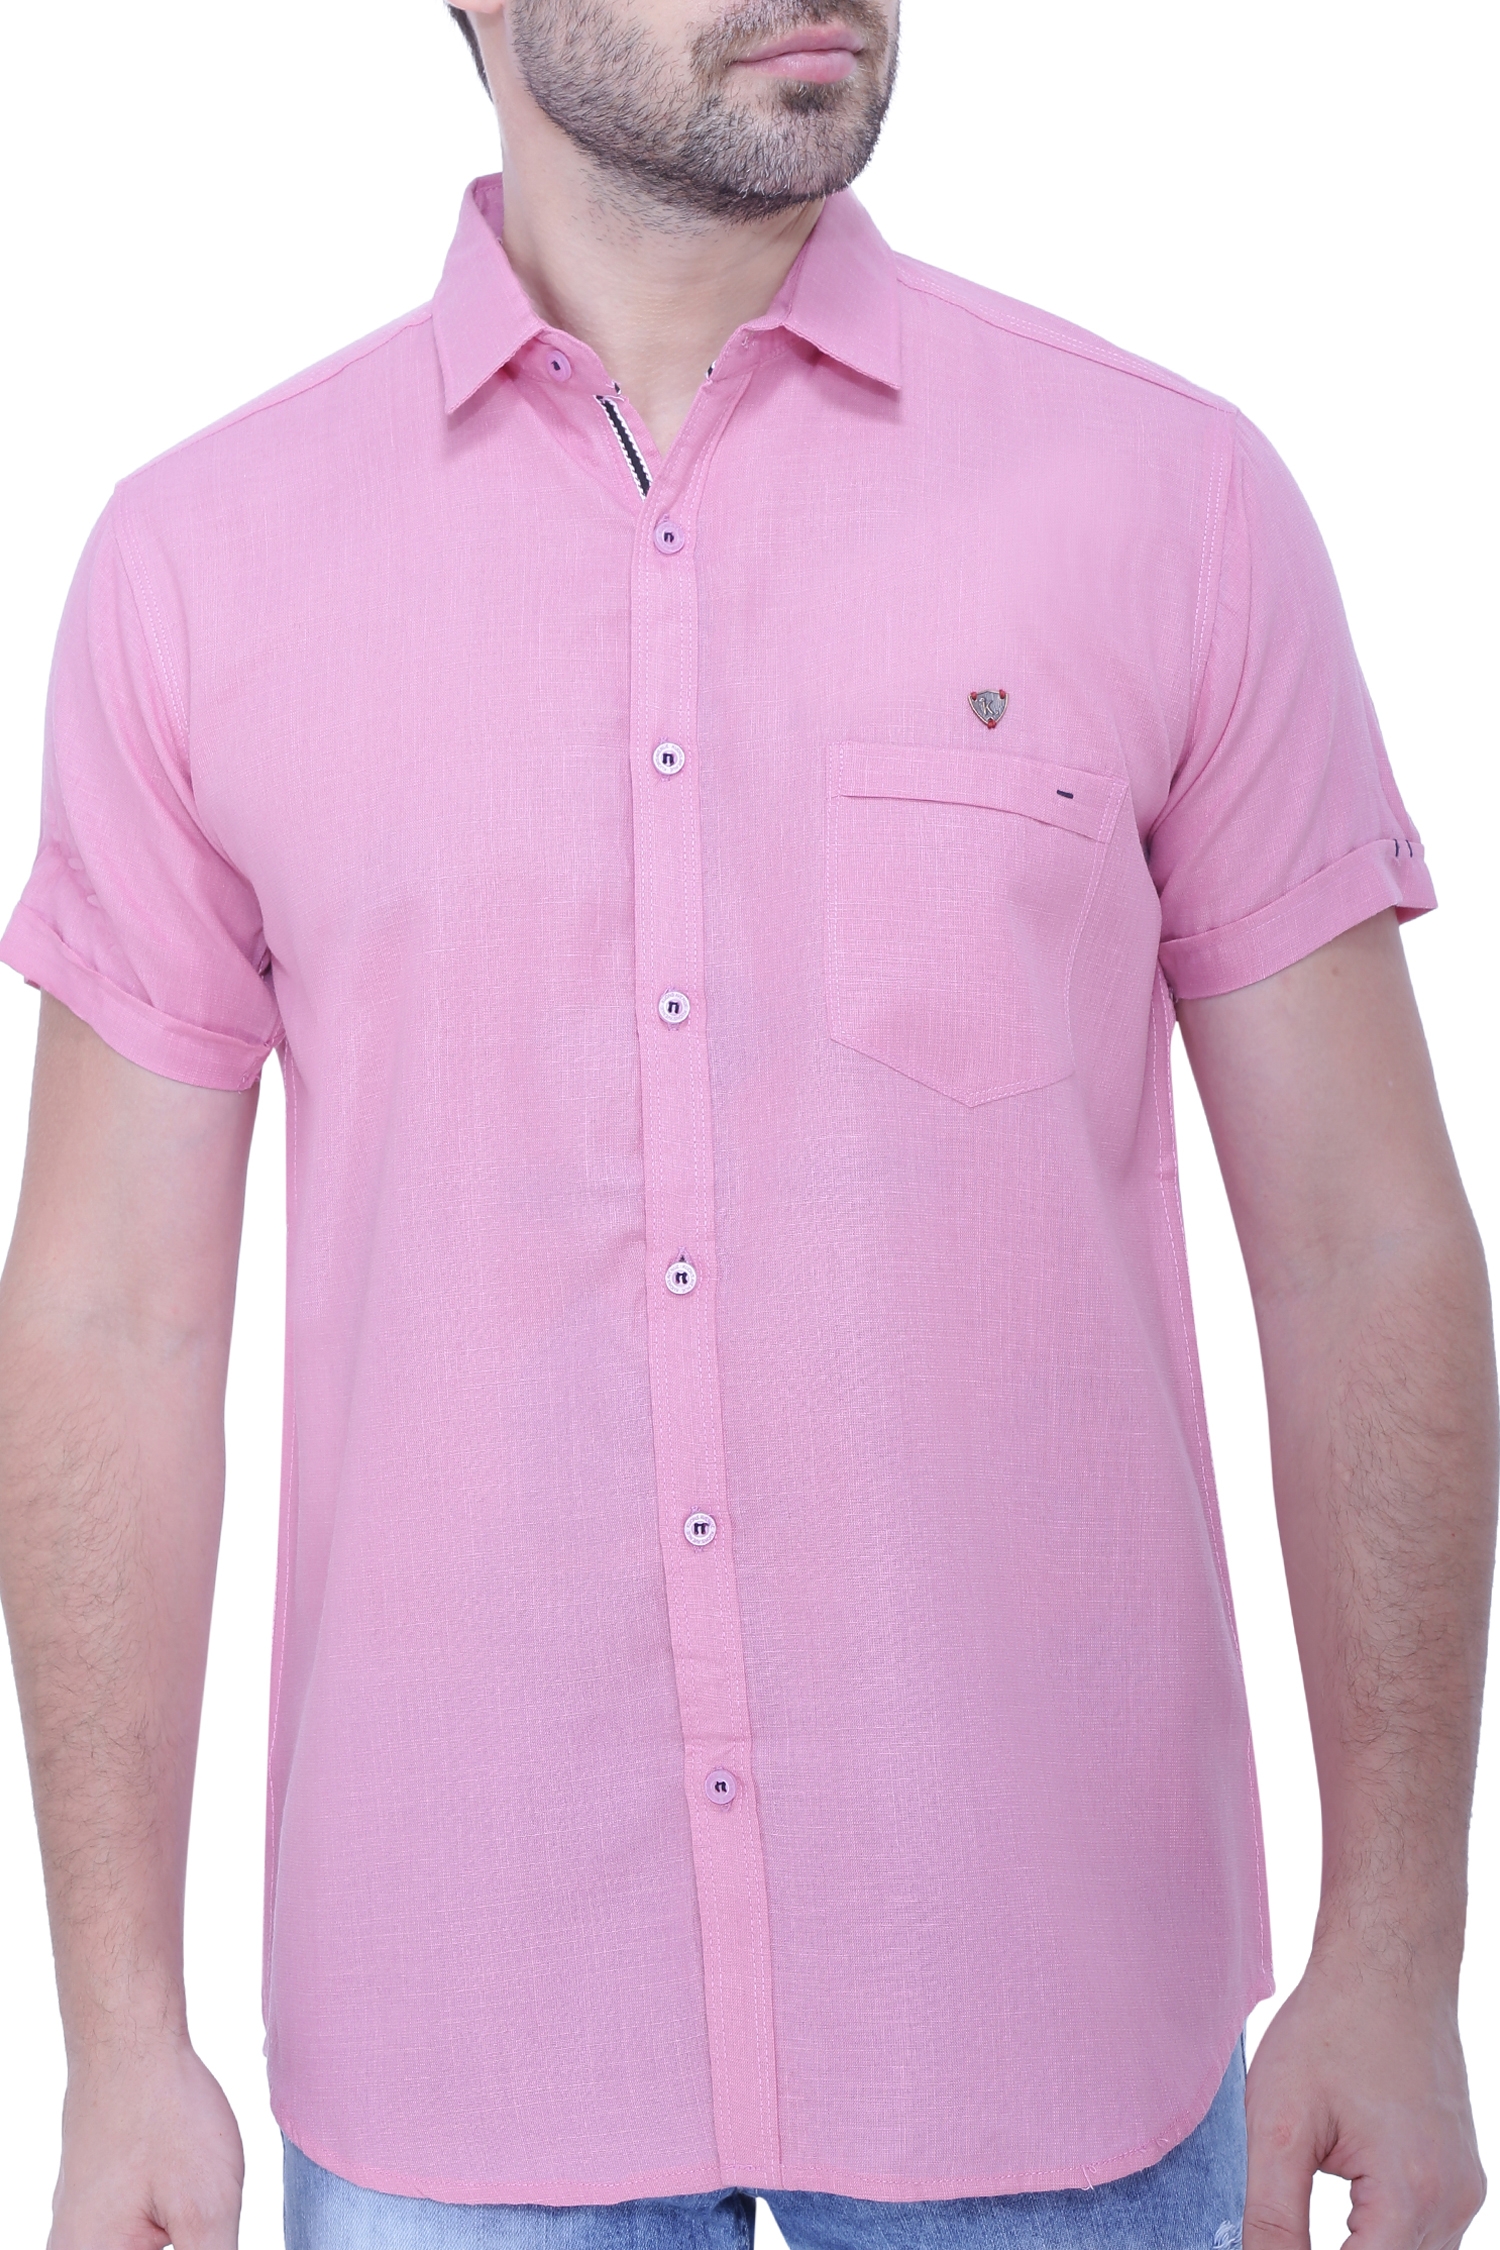 Kuons Avenue | Kuons Avenue Men's Linen Blend Half Sleeves Casual Shirt-KACLHS1232 3